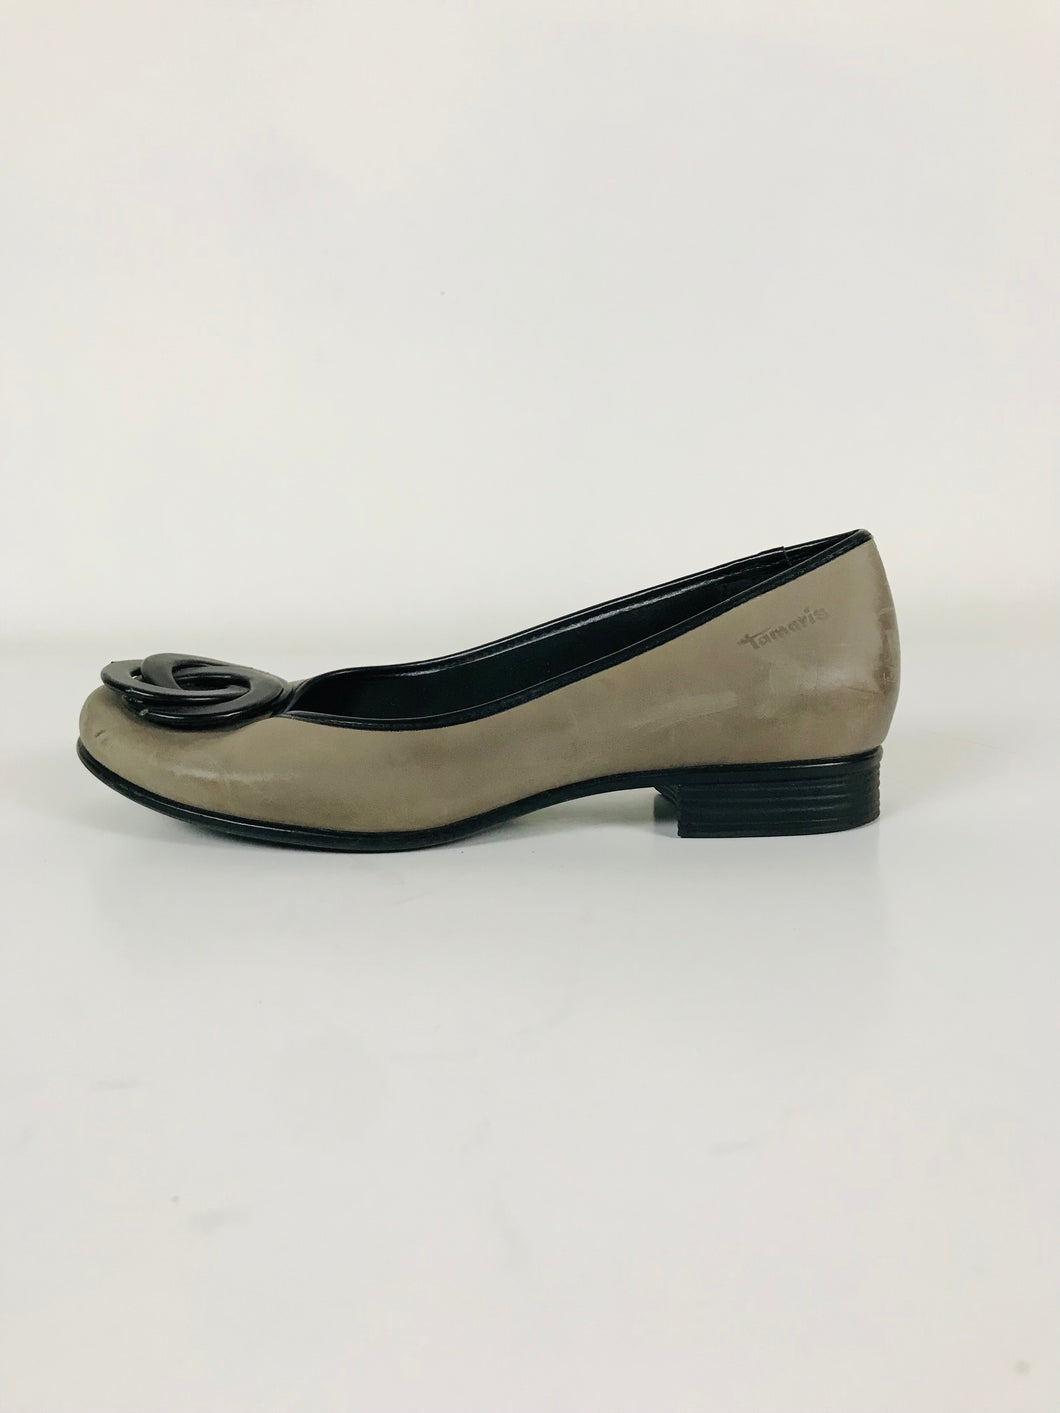 Tamaris Women's Leather Slip-on Flats Shoes | 38 UK5 | Brown